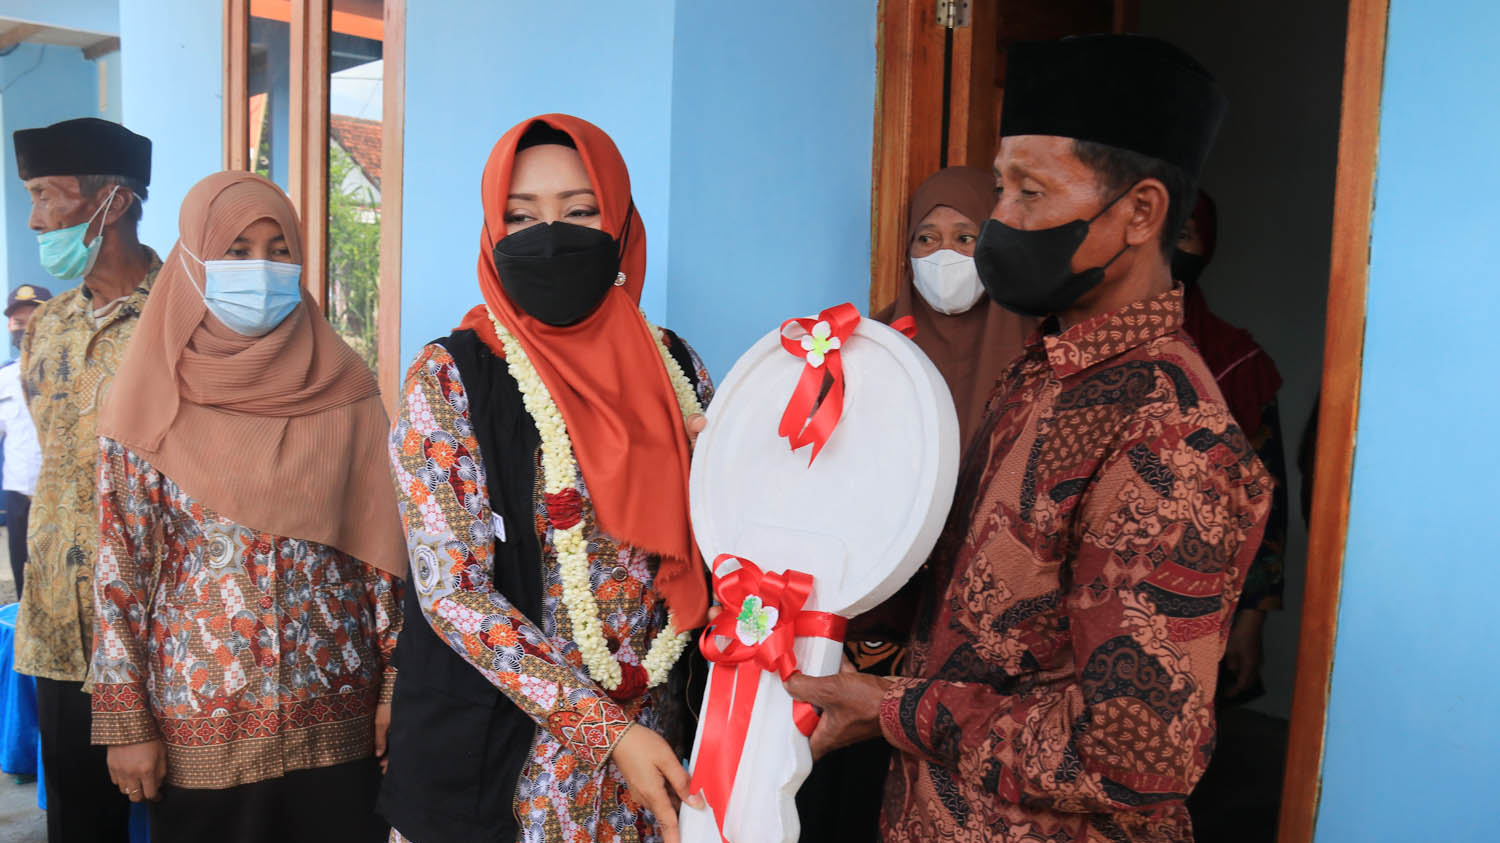 Bupati Mojokerto Ikfina Fahmawati menyerahkan secara simbolis replika kunci rumah kepada warga penerima bantuan bedah rumah, Kamis 24 Februari 2022. (Foto: Diskominfo Kabupaten Mojokerto)